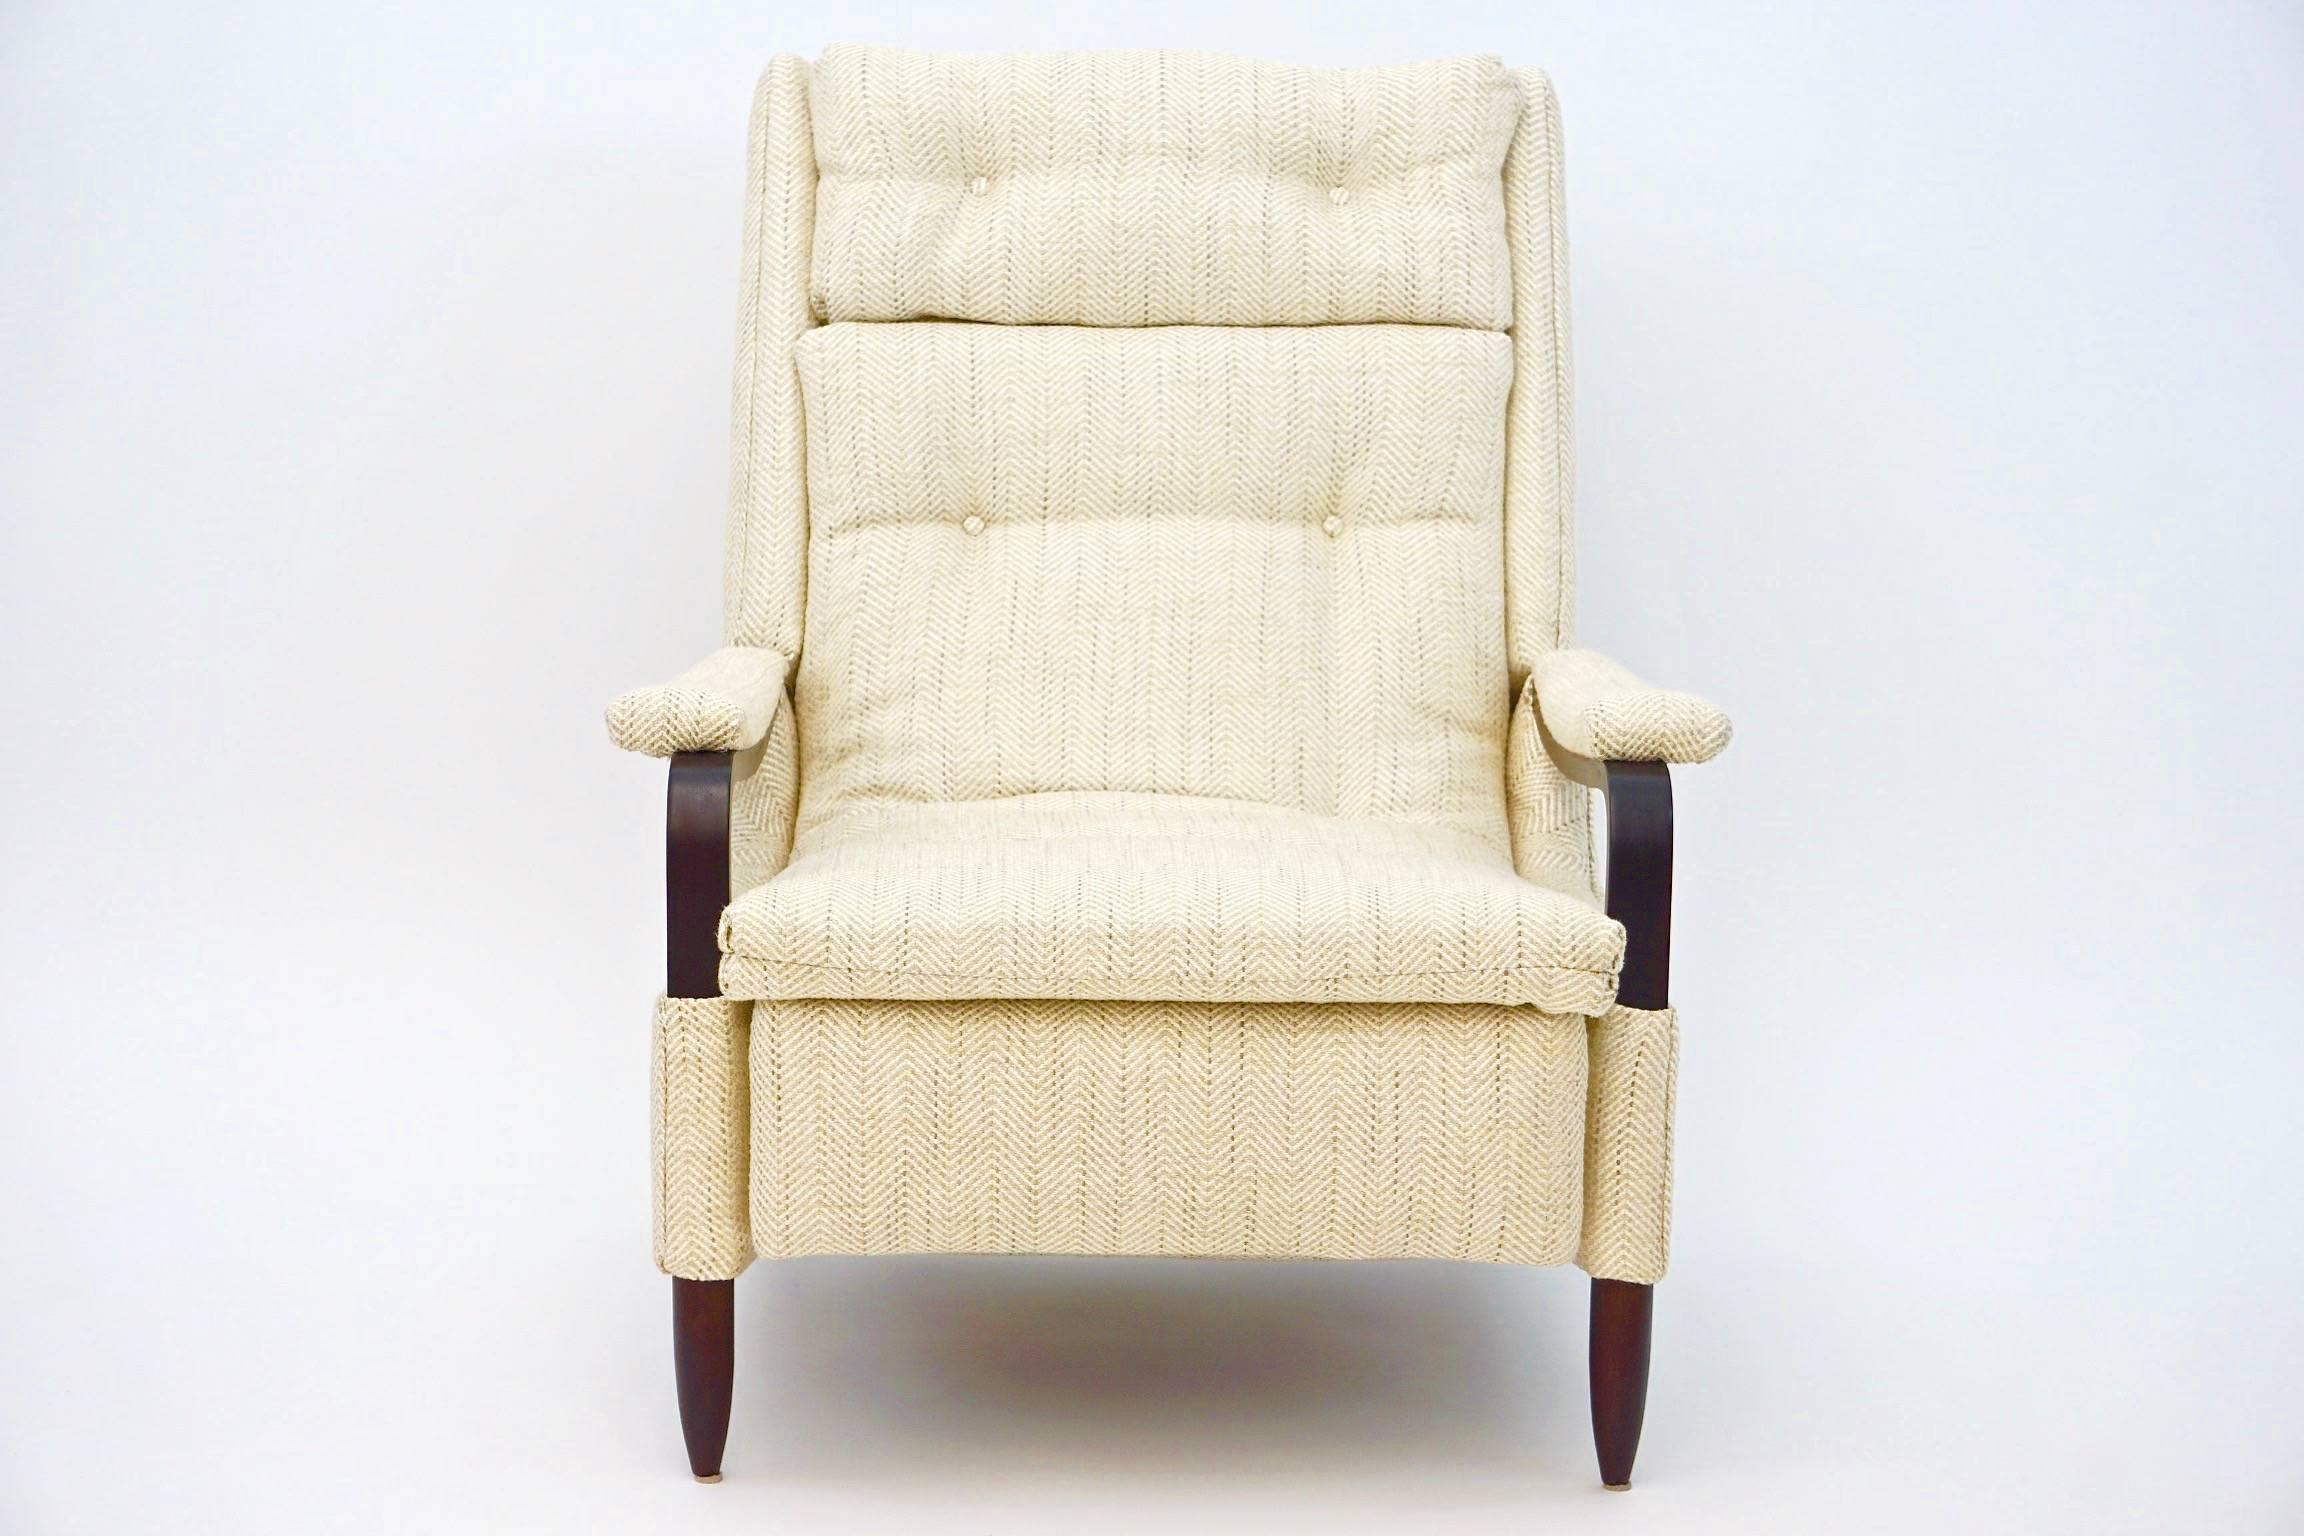 60s recliner chair